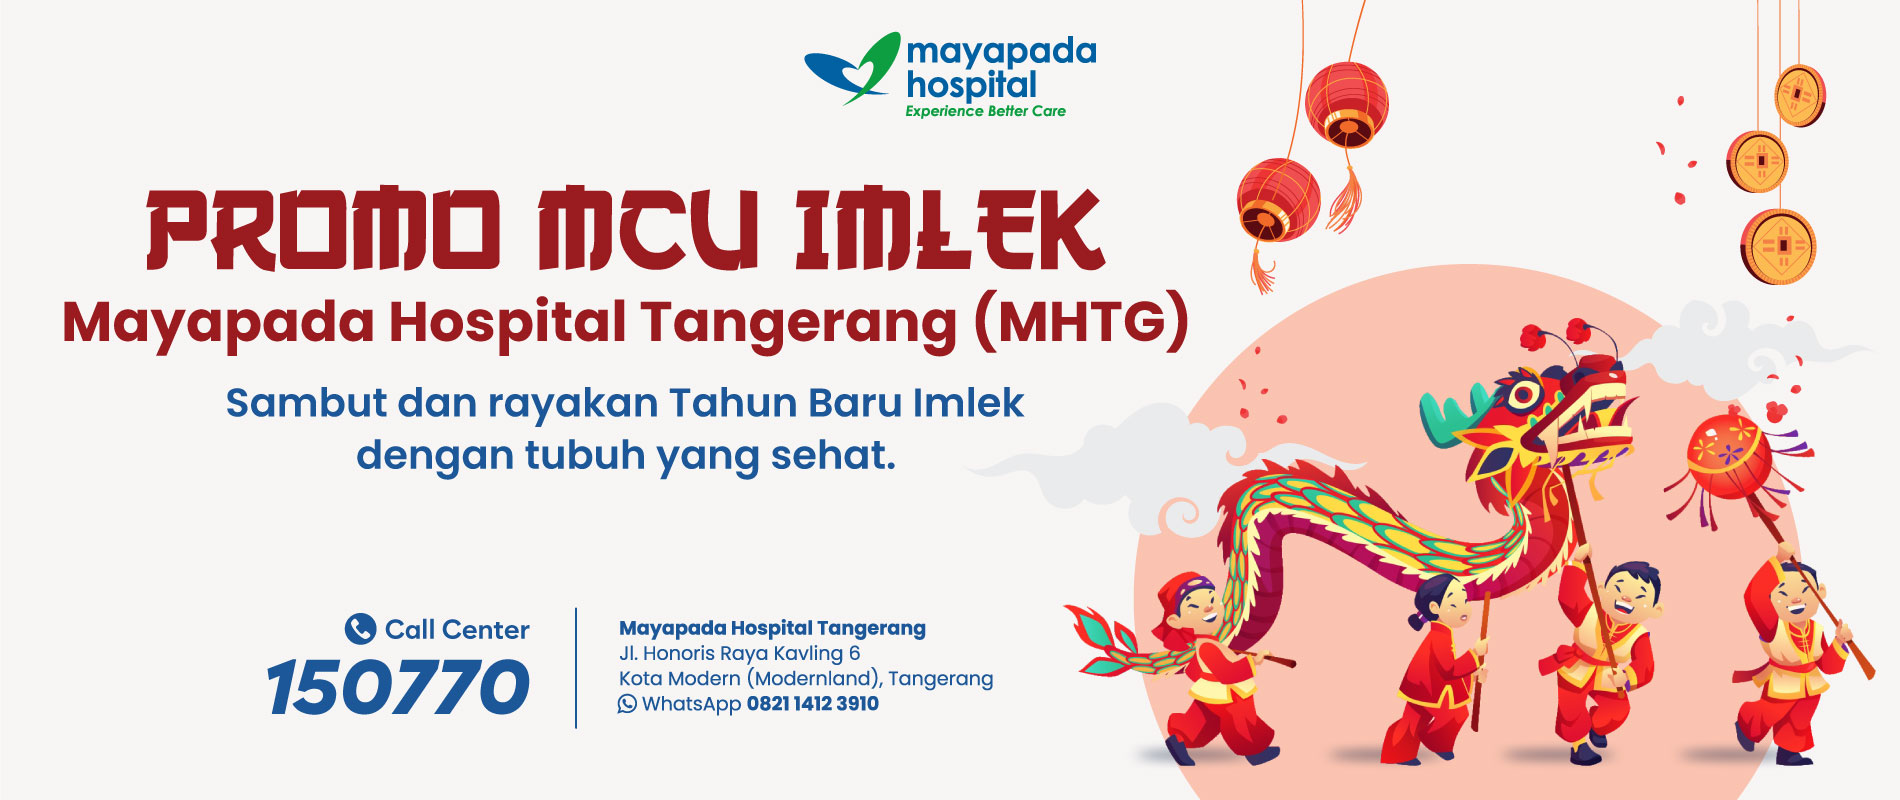 Paket Medical Check Up (MCU) Imlek di Mayapada Hospital Tangerang IMG